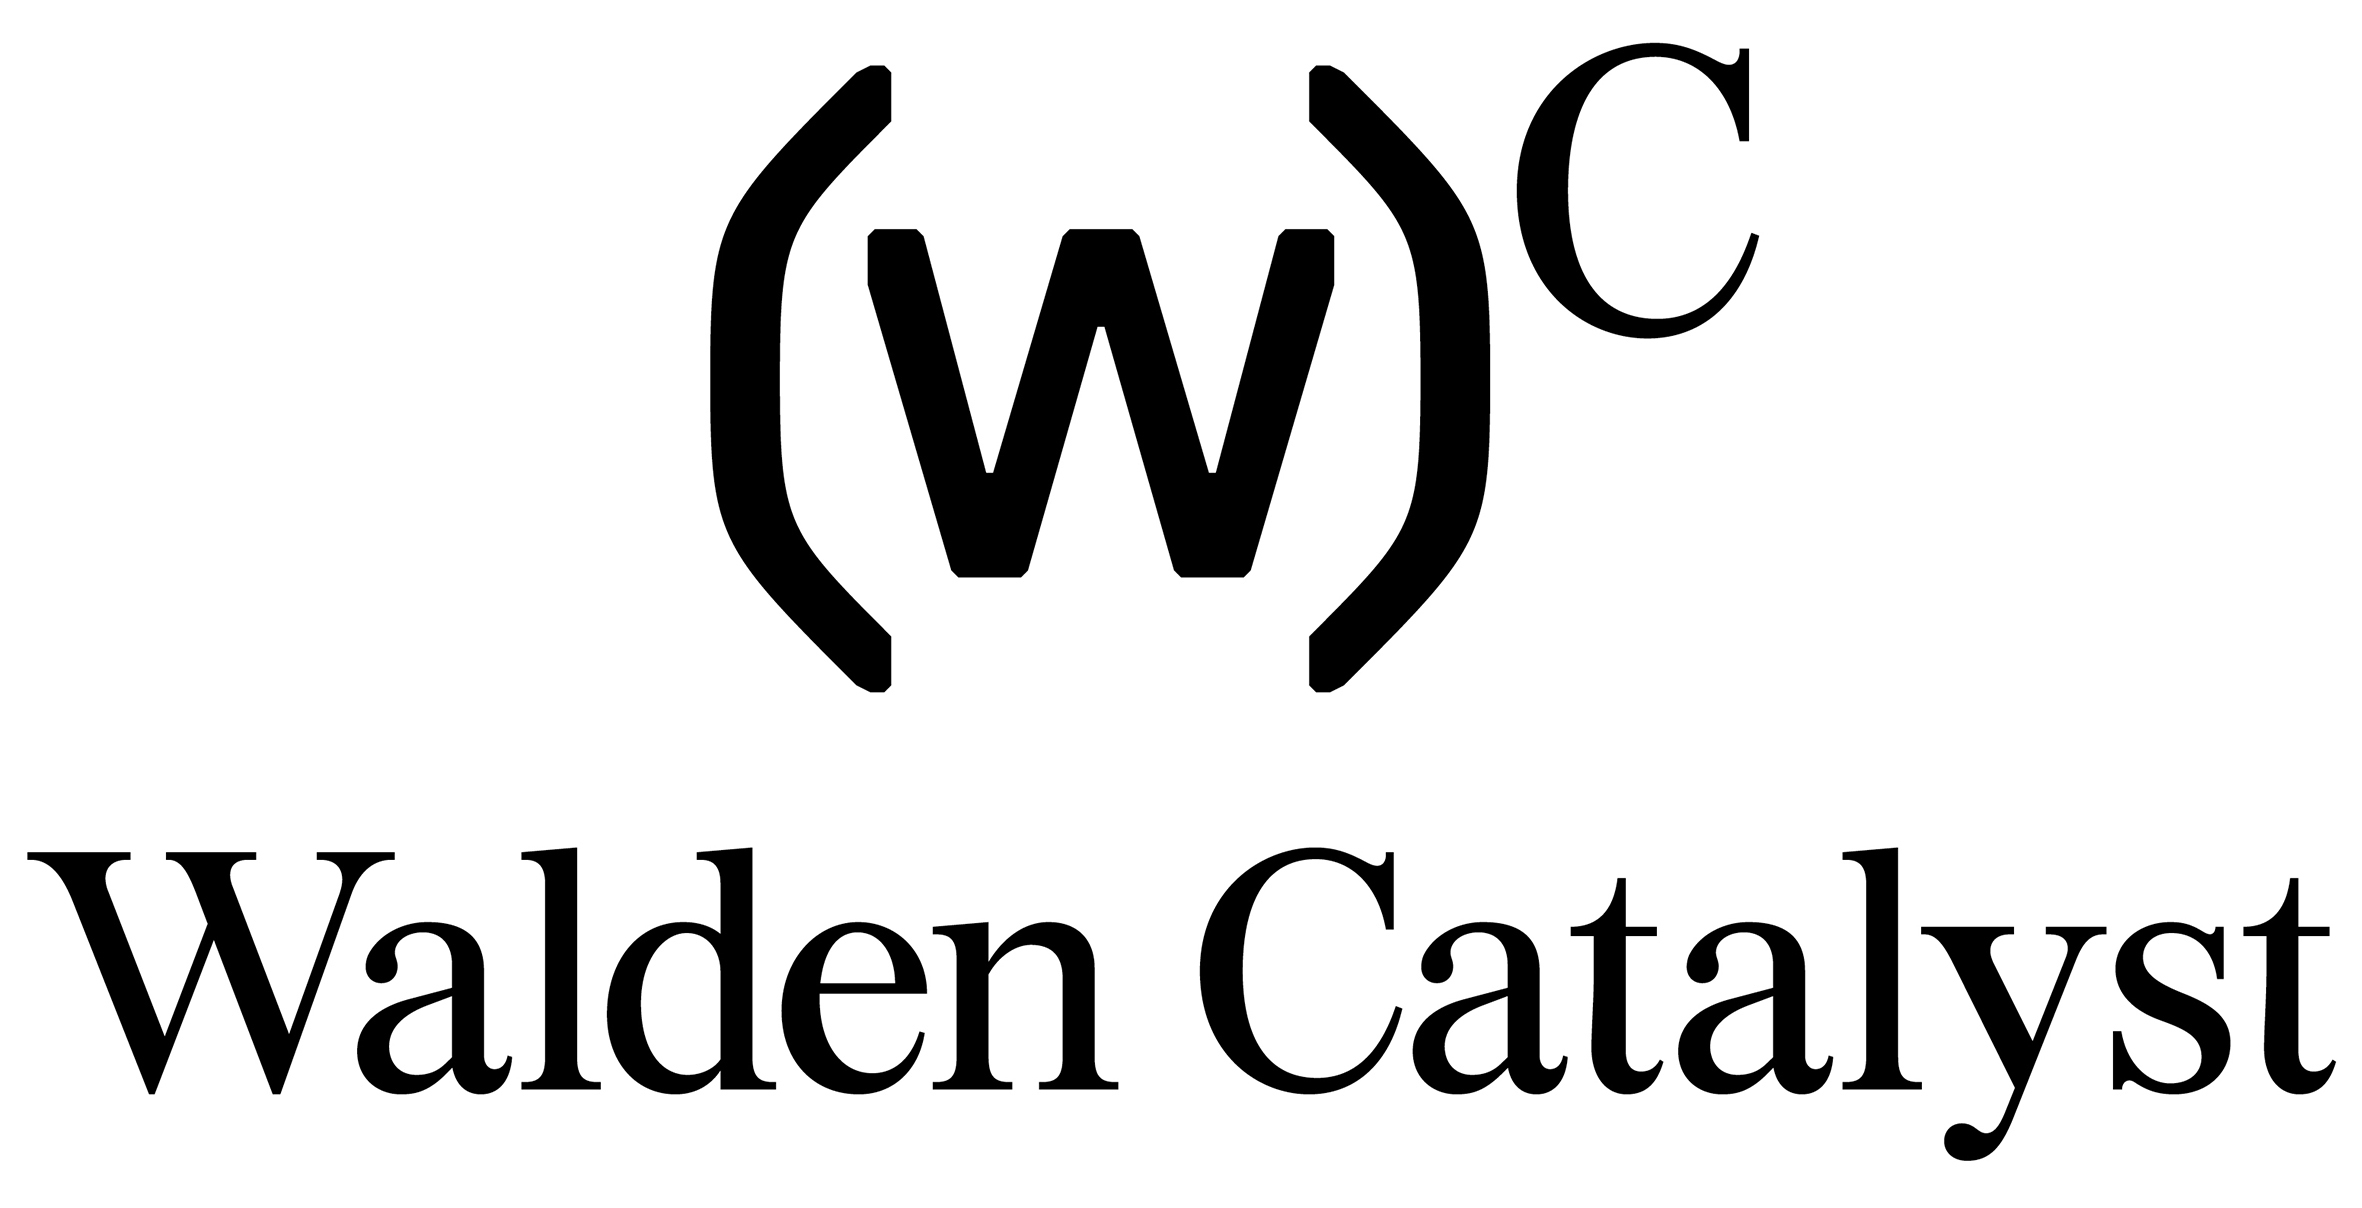 Walden Catalyst